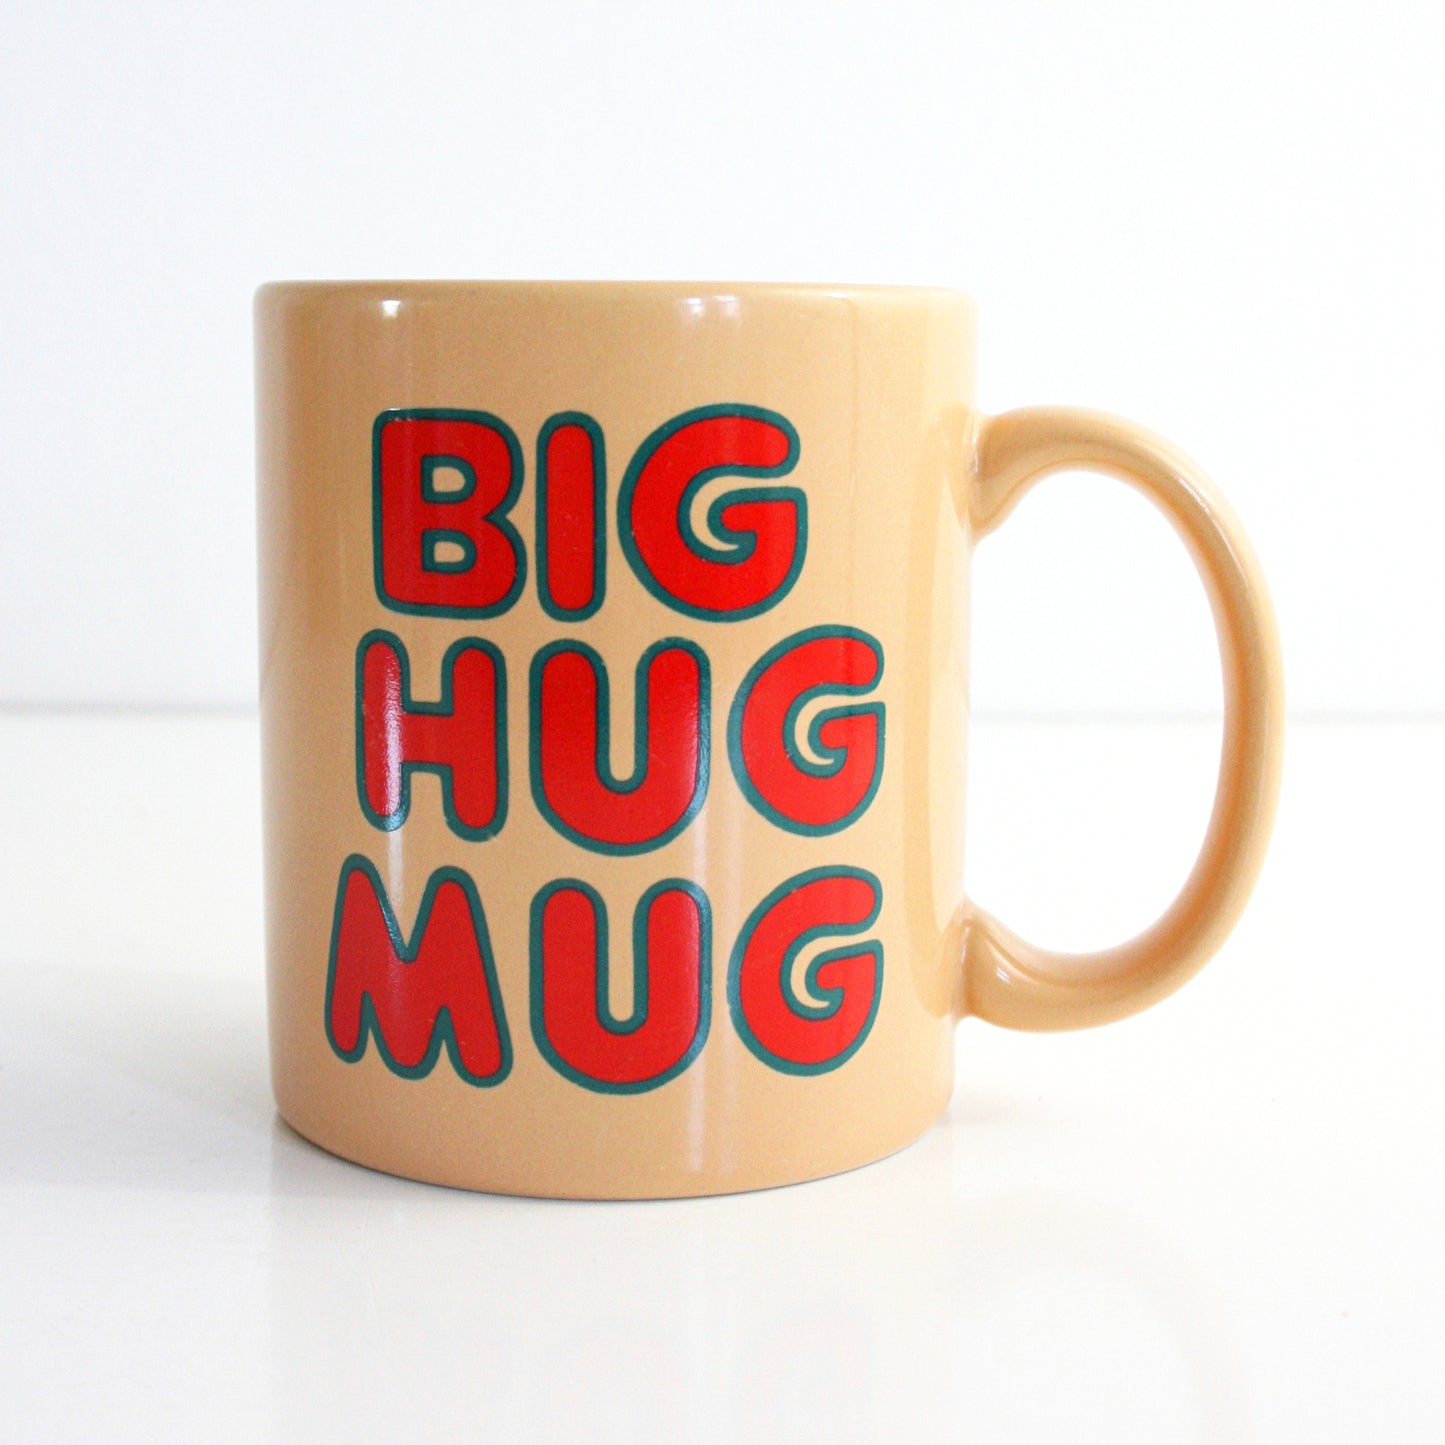 SOLD - Authentic Vintage 1980's Big Hug Mug